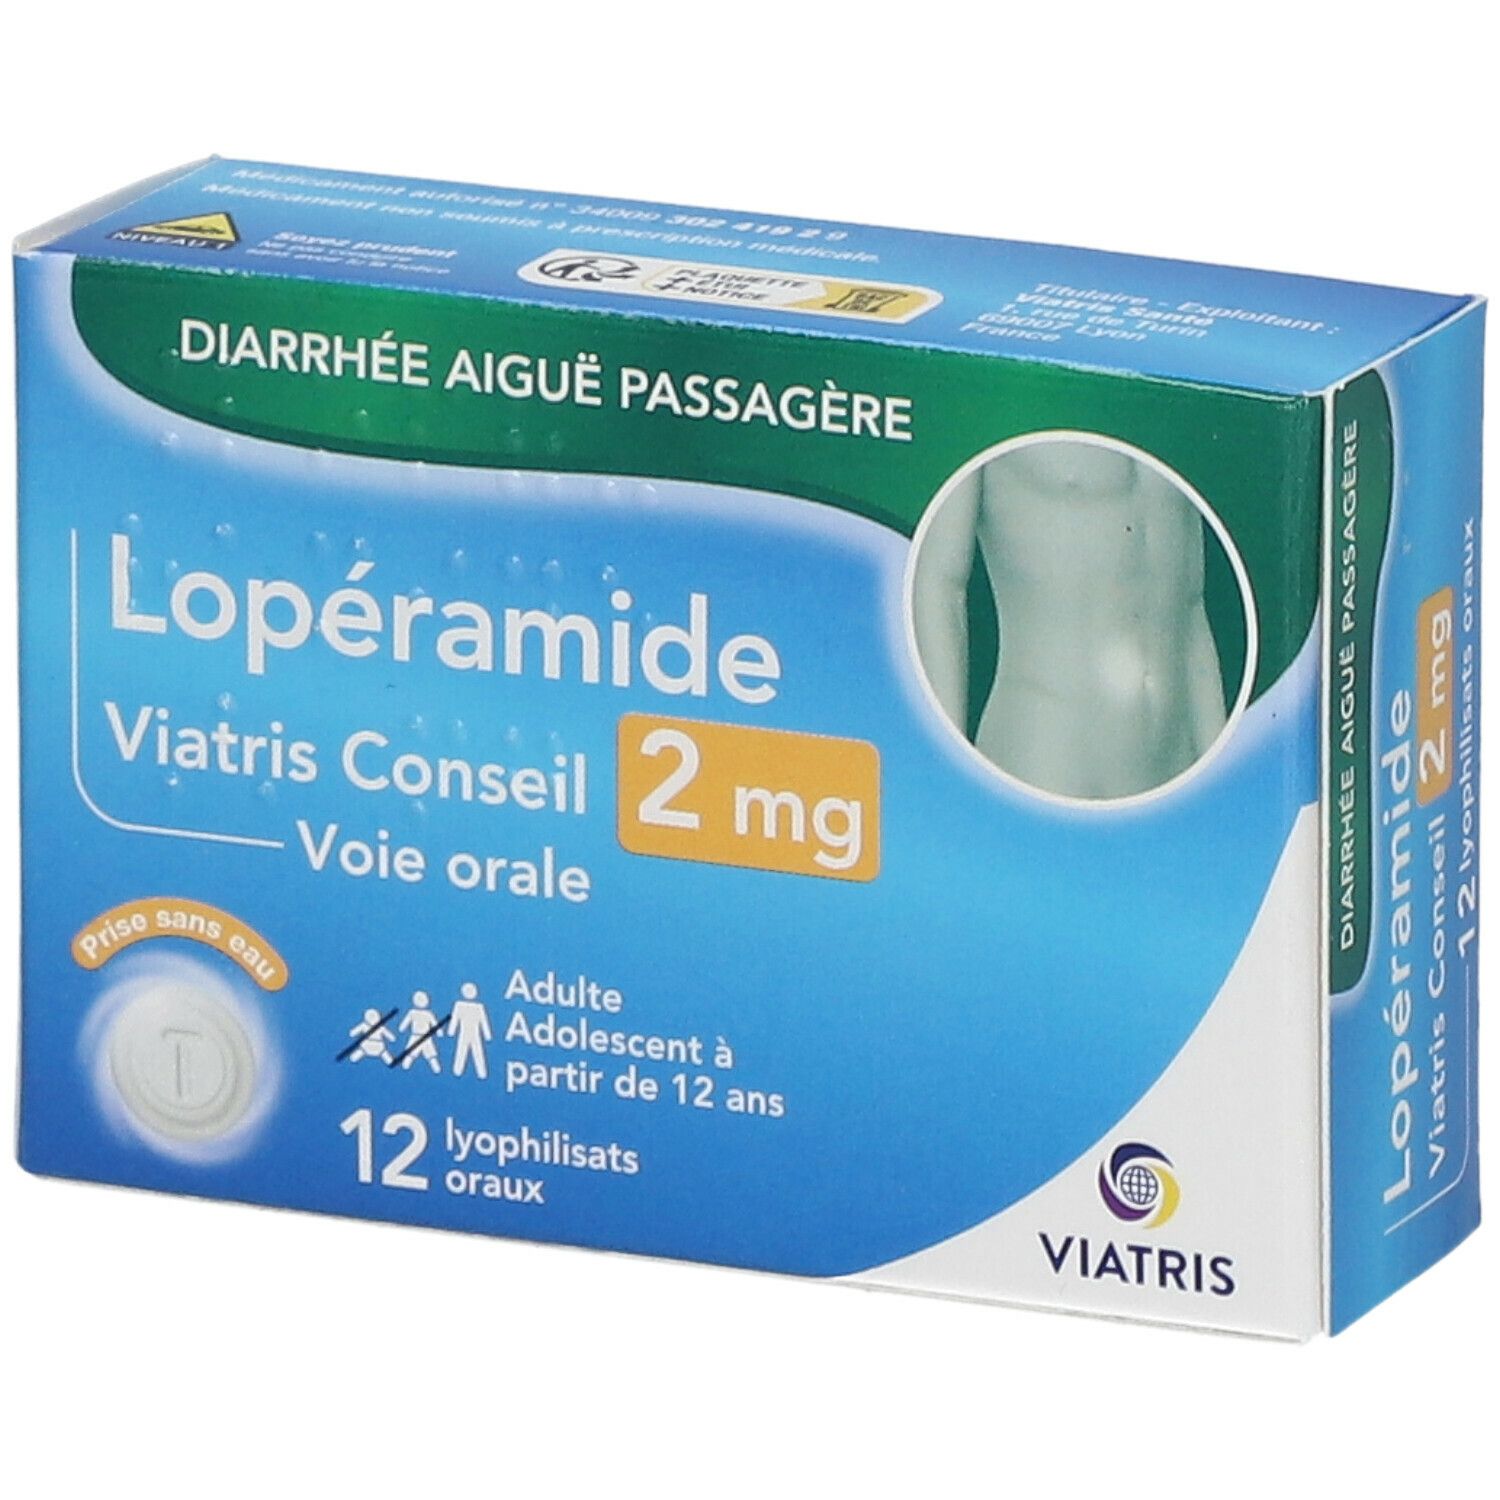 Lopéramide Viatris Conseil 2 mg